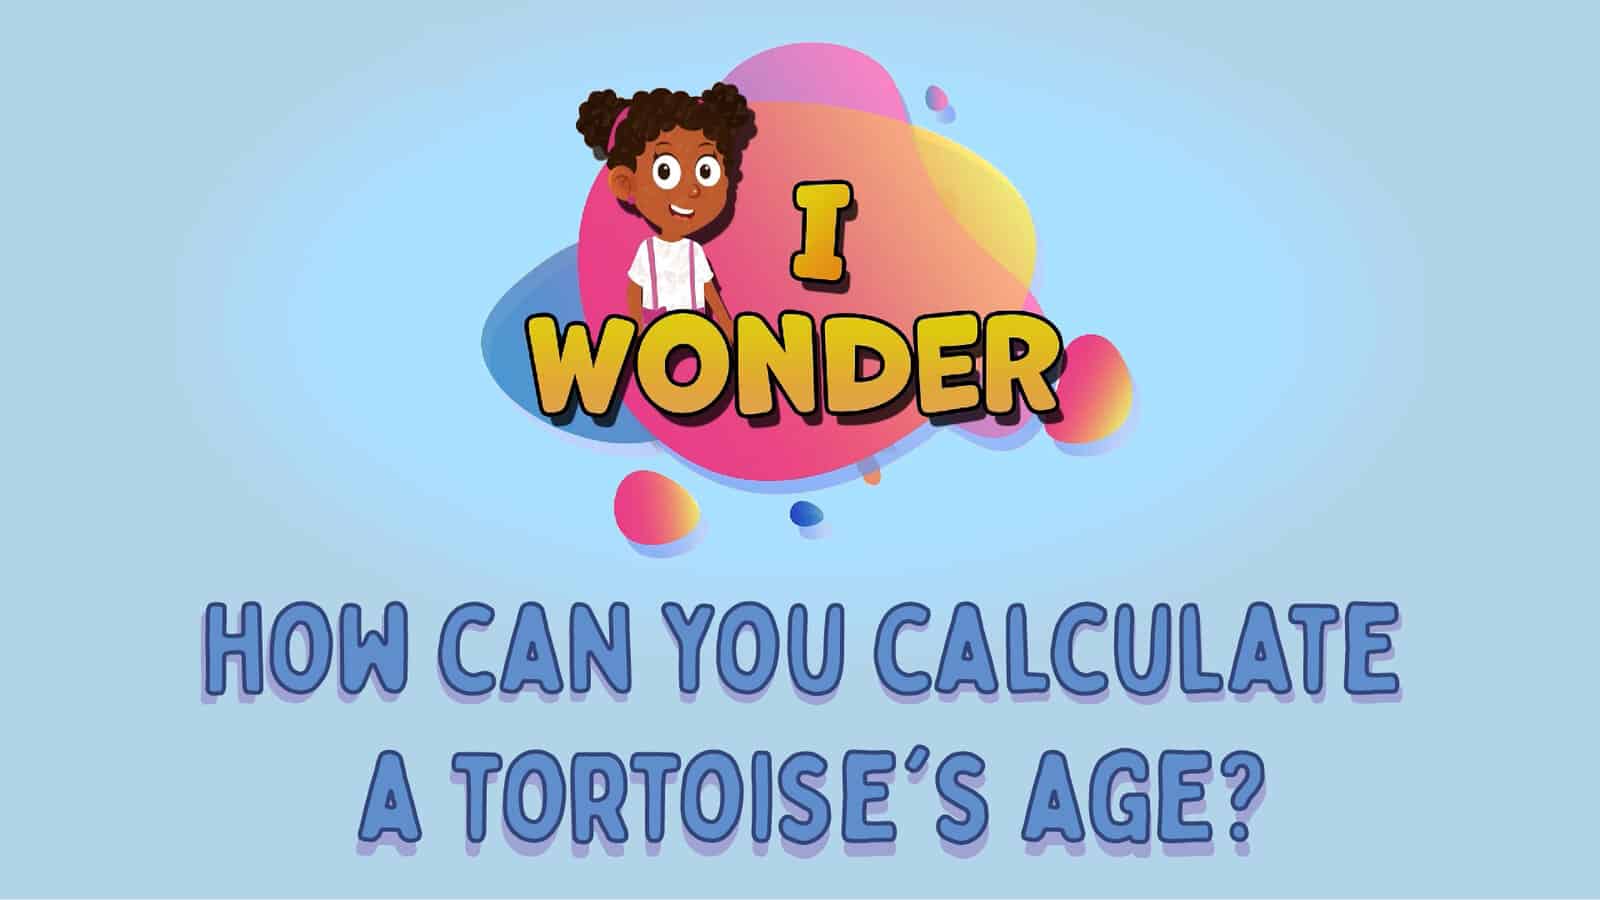 Tortoise's Age LearningMole